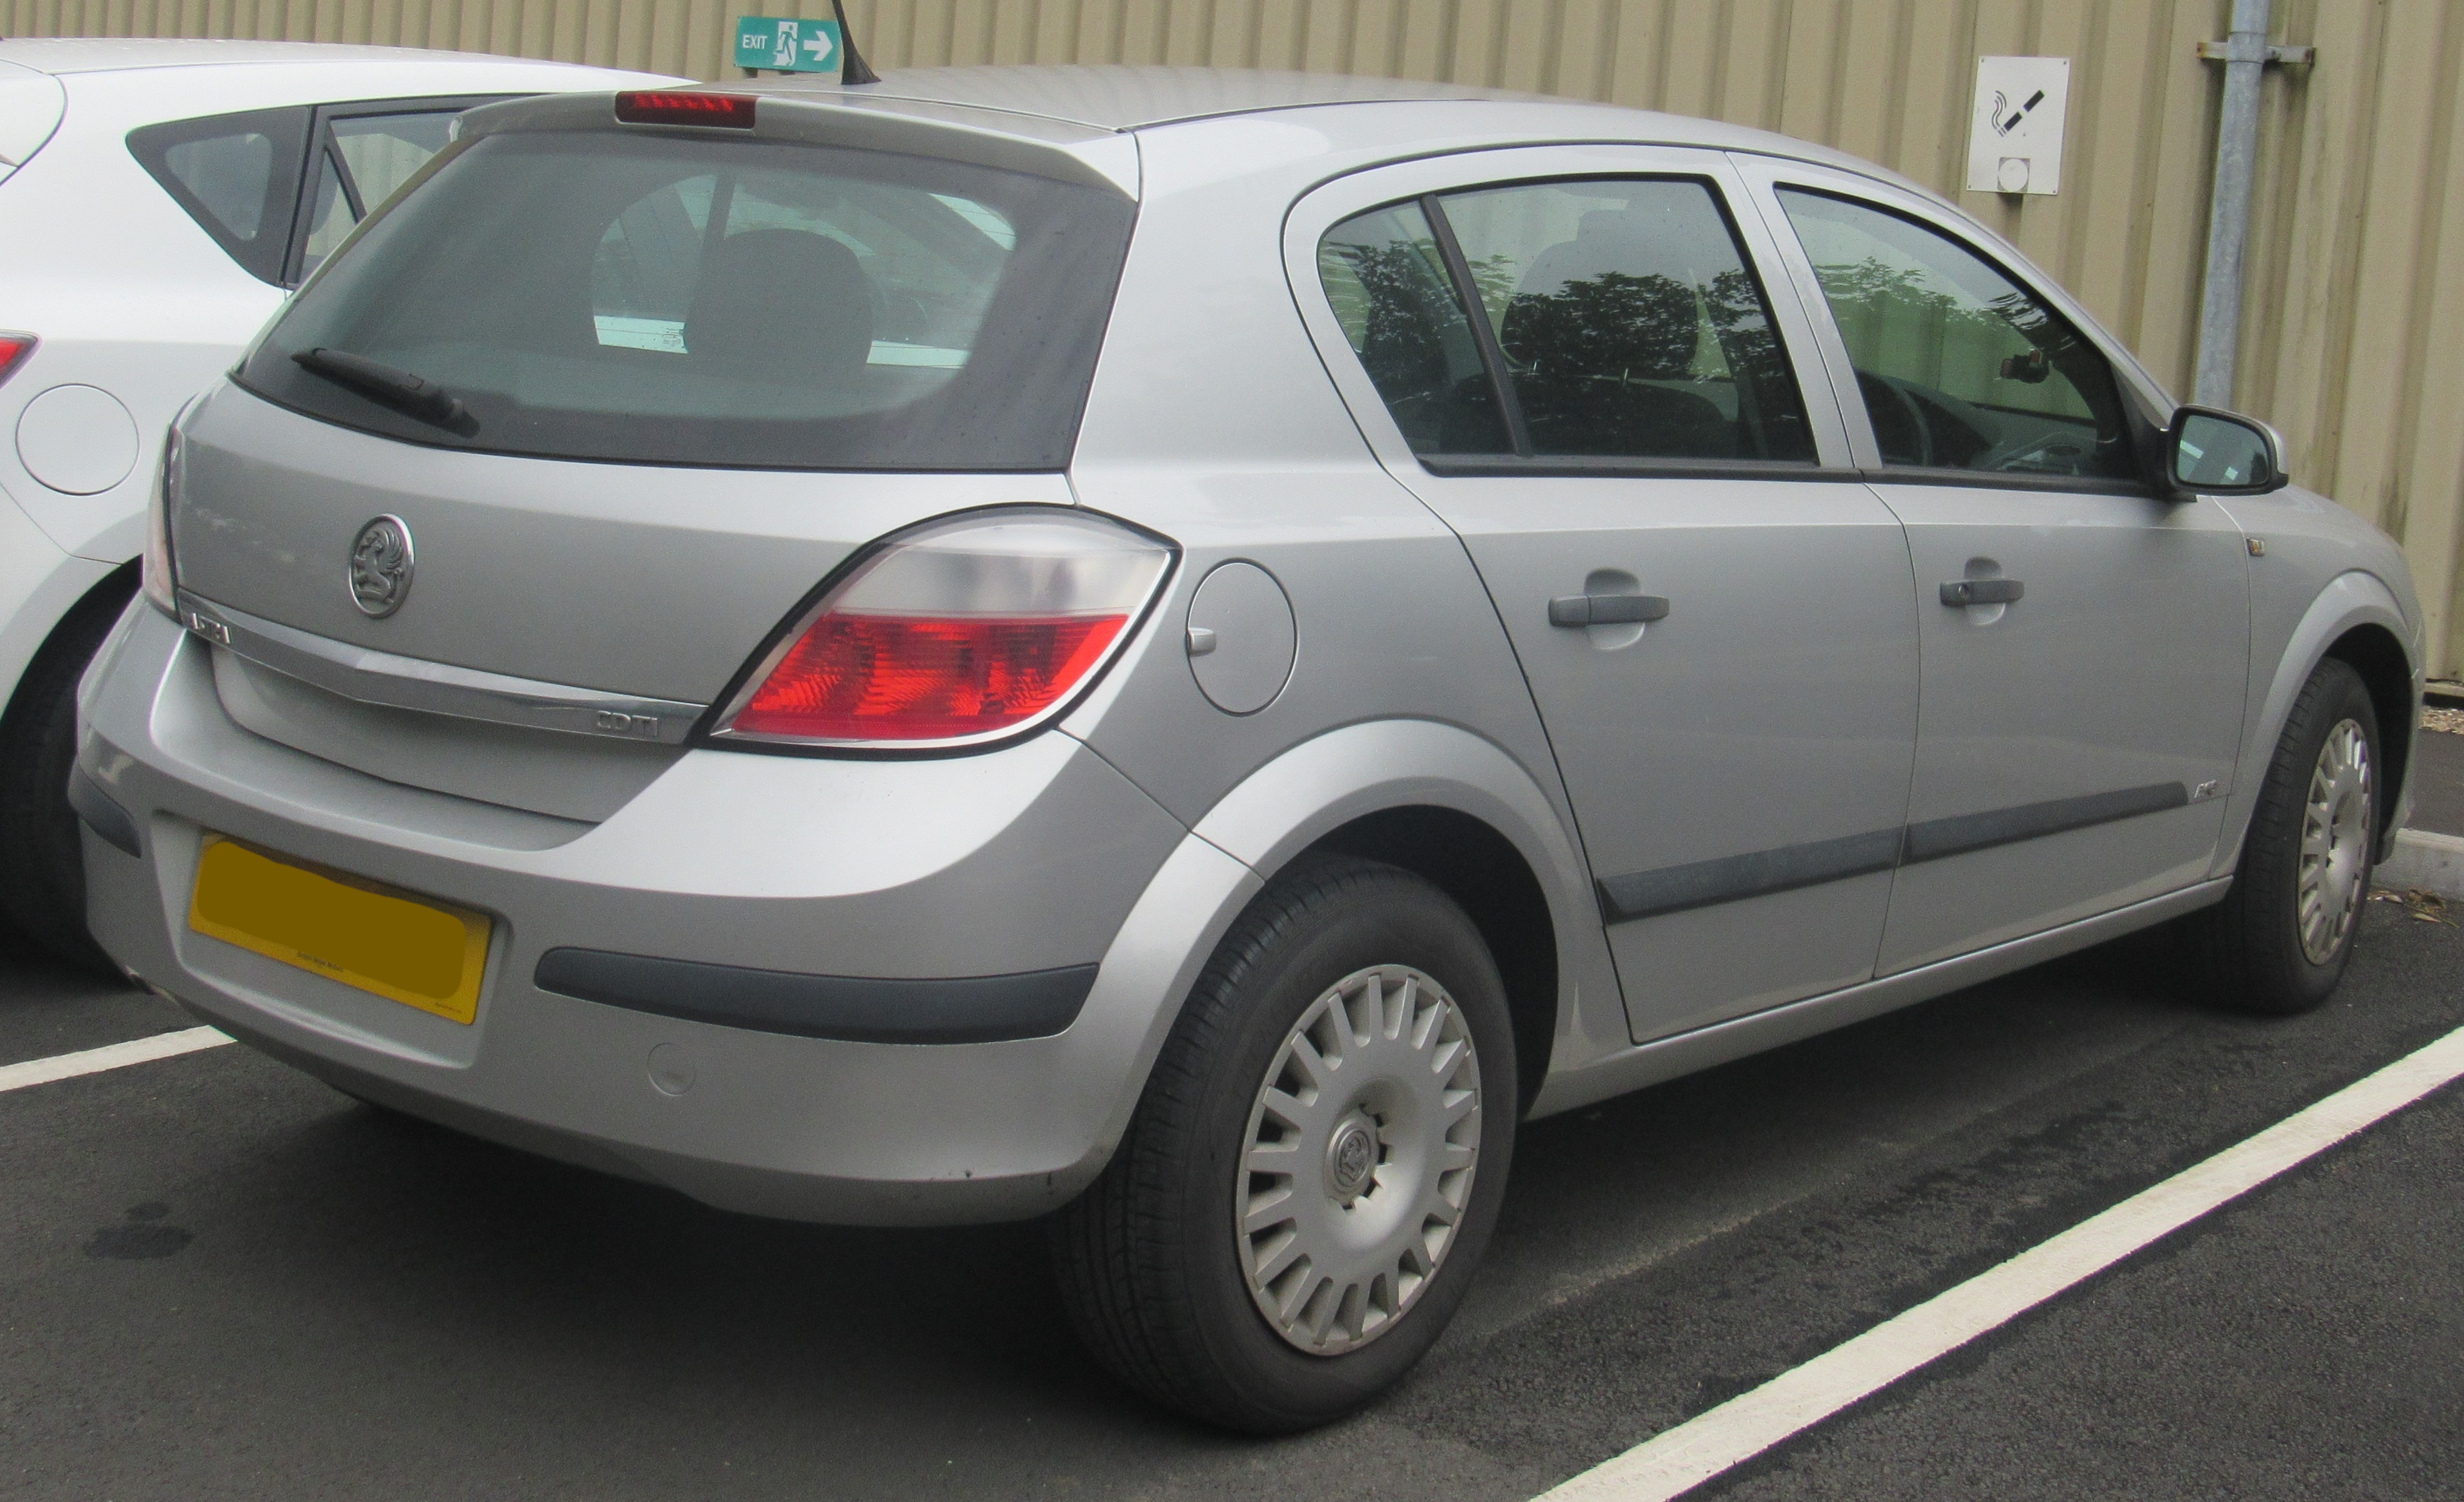 Opel Astra Hatchback exterior model